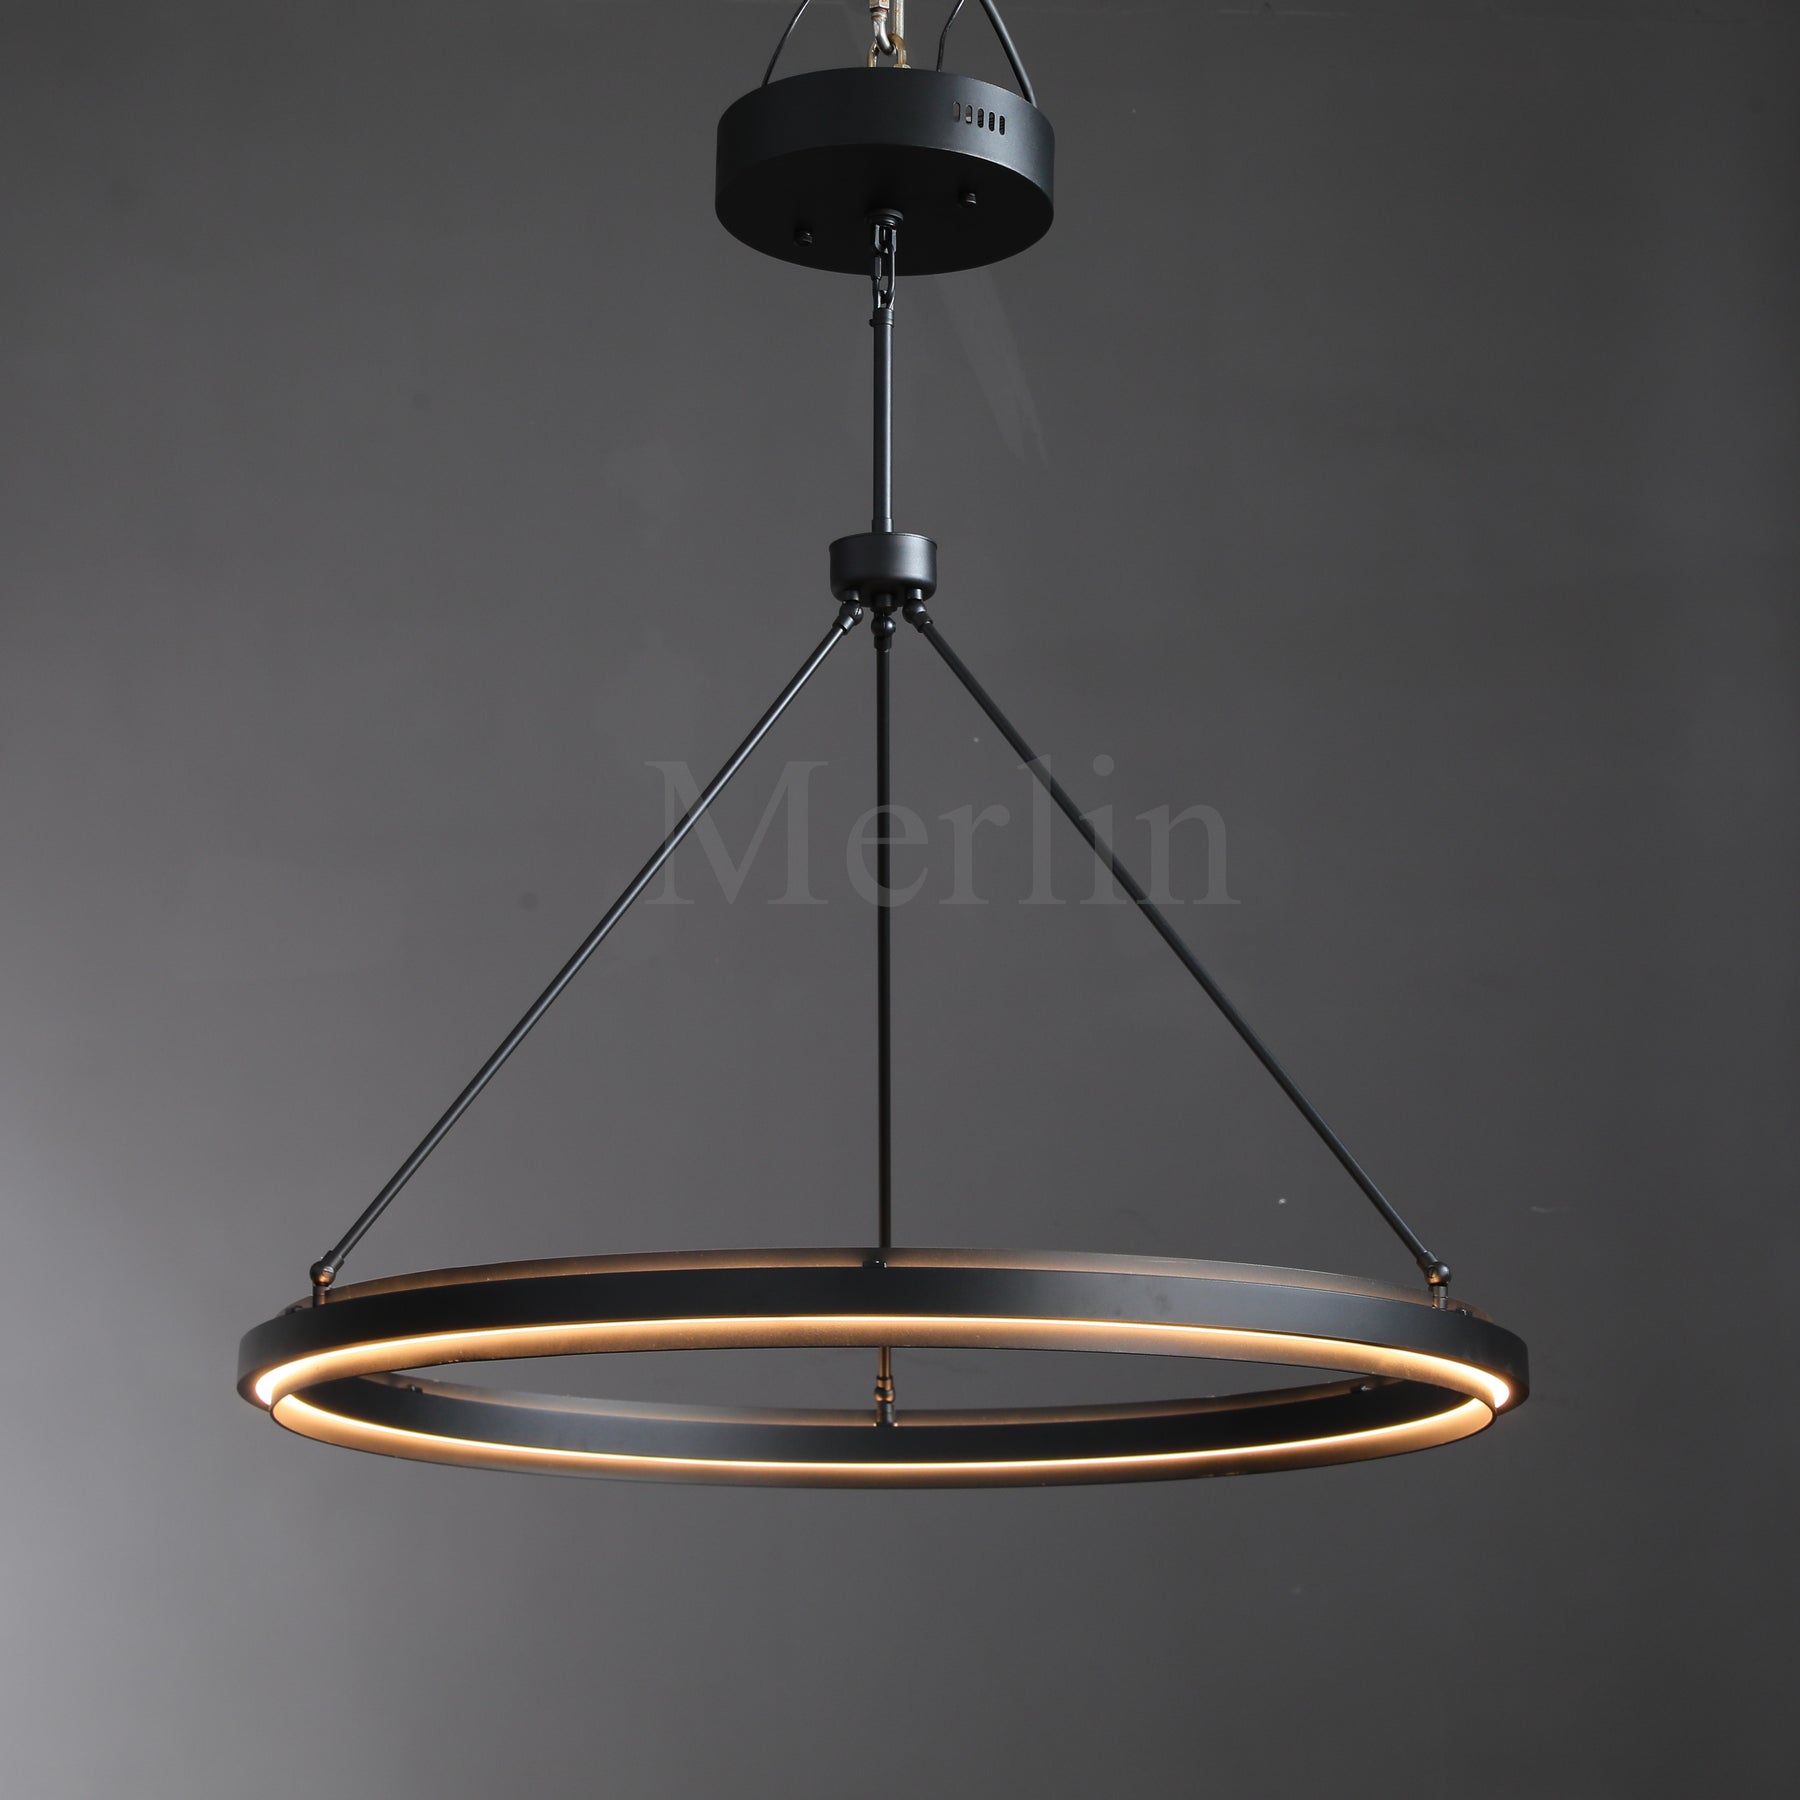 George Elegant Modern Lamp Fixture, Metal Chandelier for Living Room, Bedroom, Dining Room